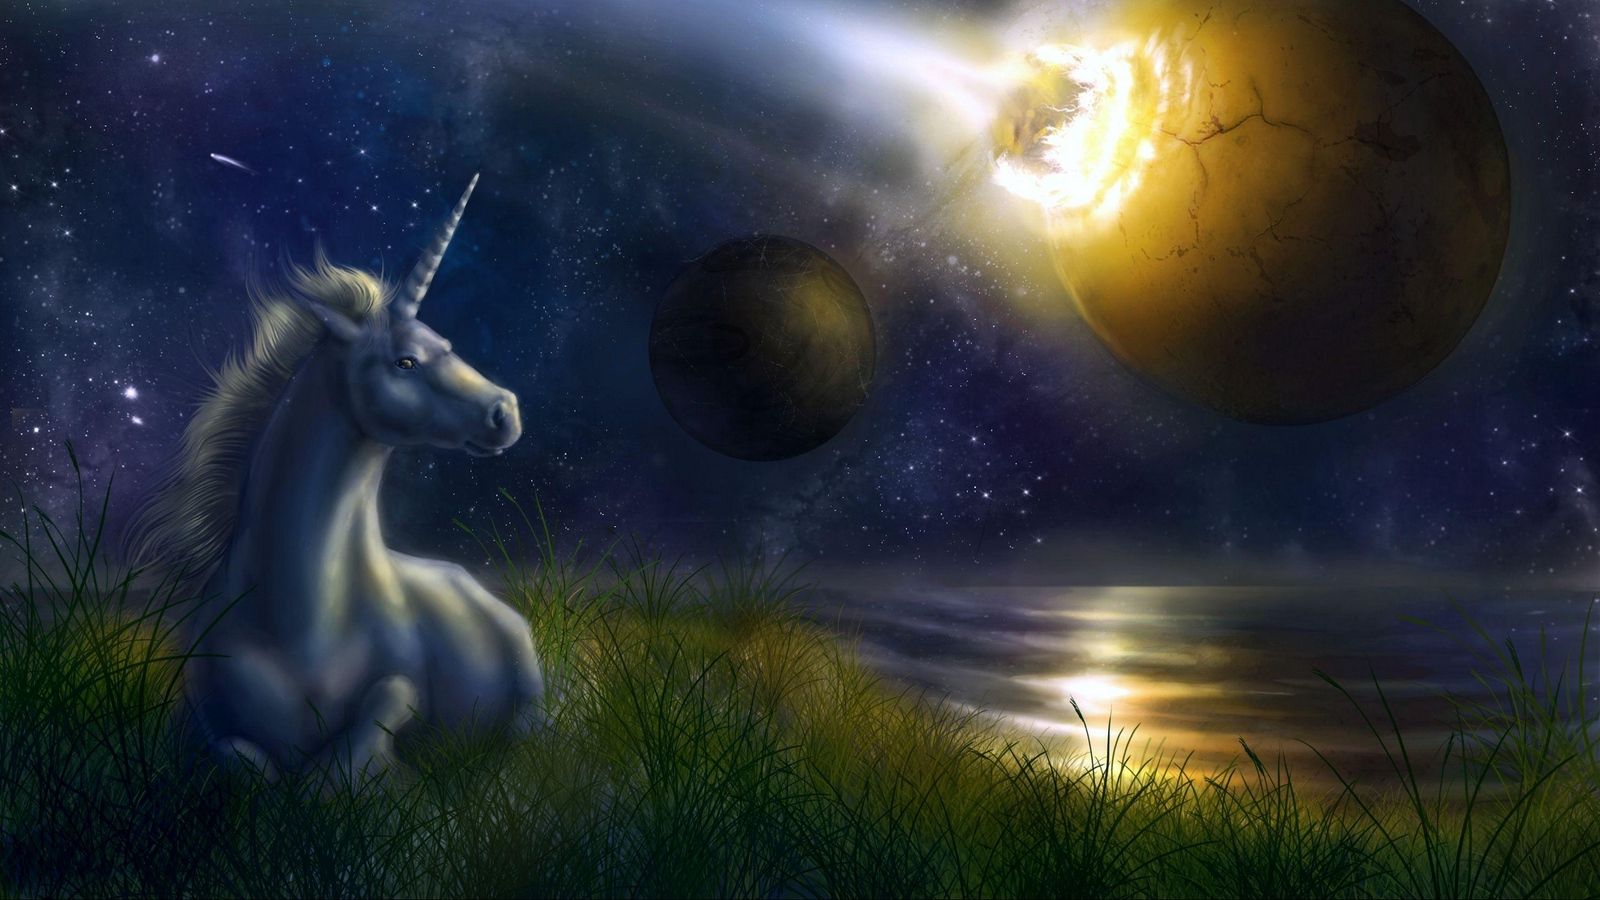 Download wallpaper 1600x900 unicorn, night, space, planets